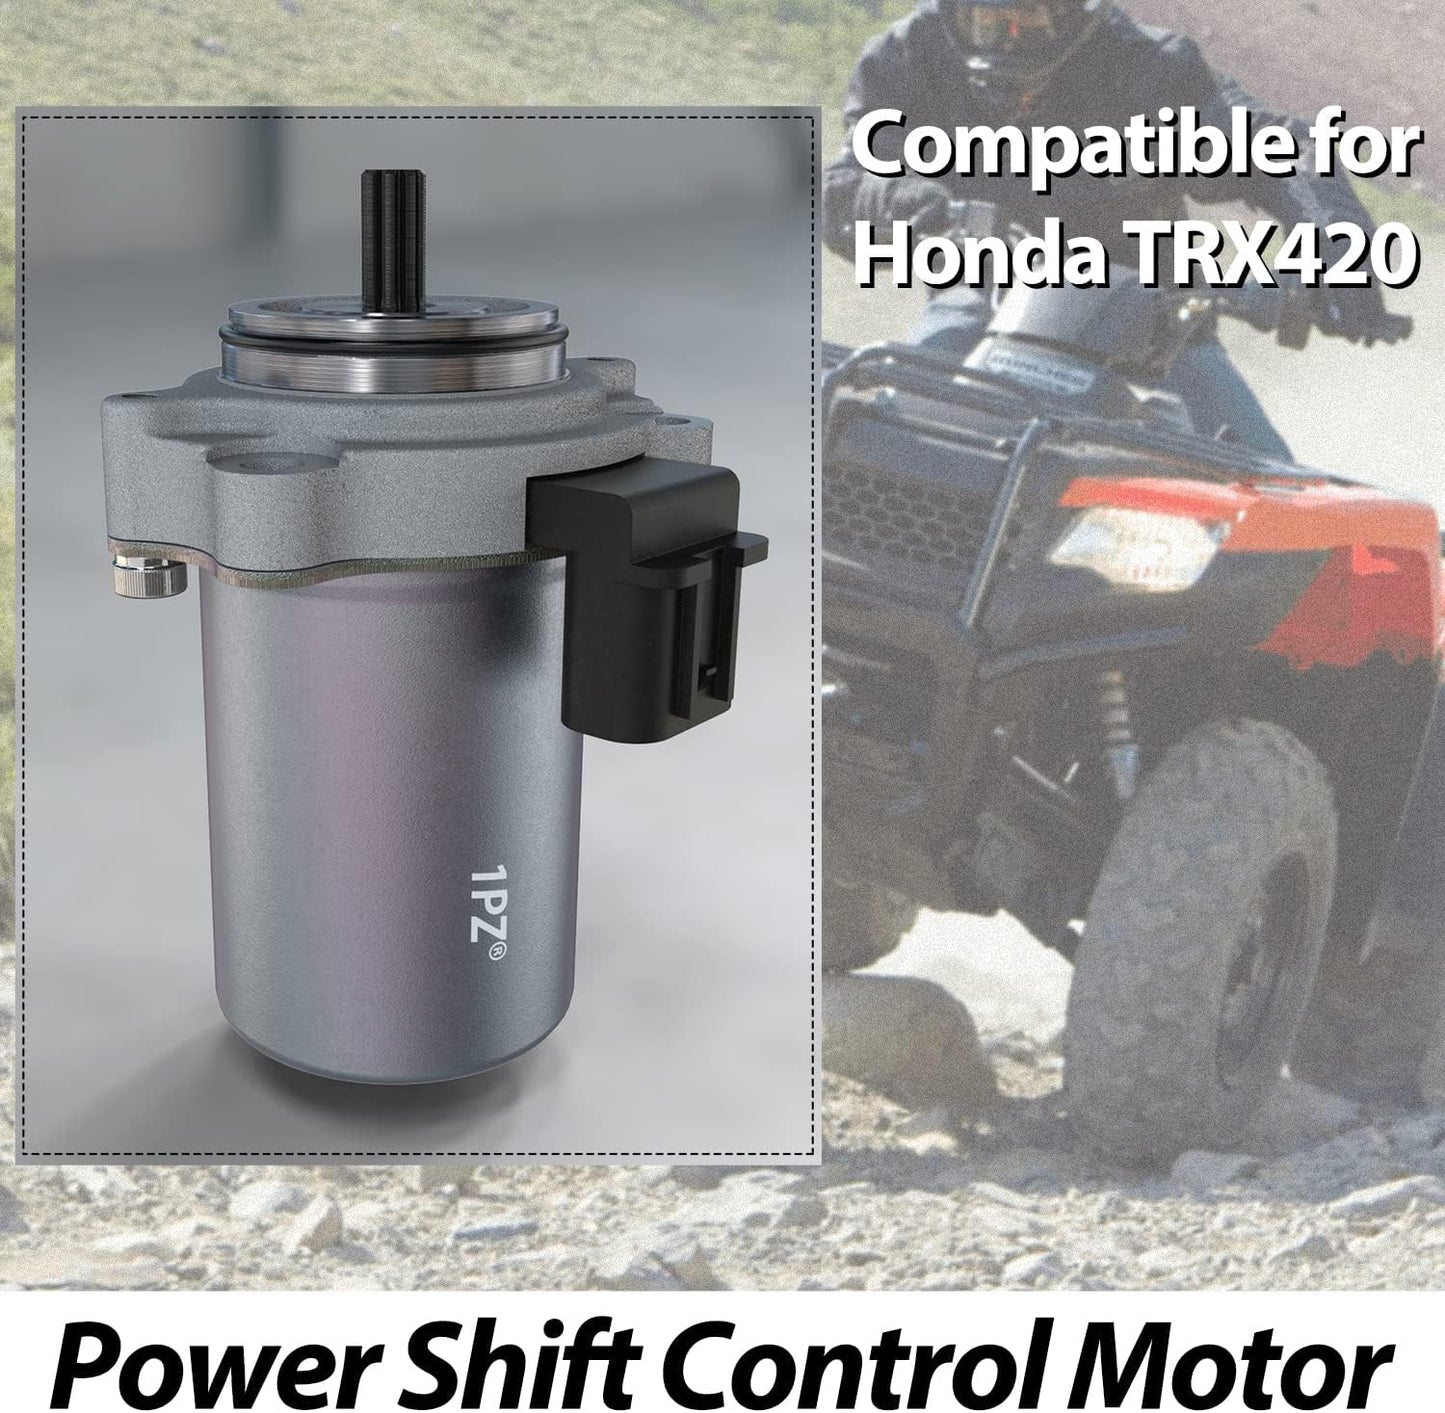 1PZ BL6-OU7 Power Shift Control Motor Replacement for Honda TRX420 FourTrax Rancher TRX500 Foreman Pioneer 500 1000 2007-2021 31300-HP5-601 430-58007 CMU0004